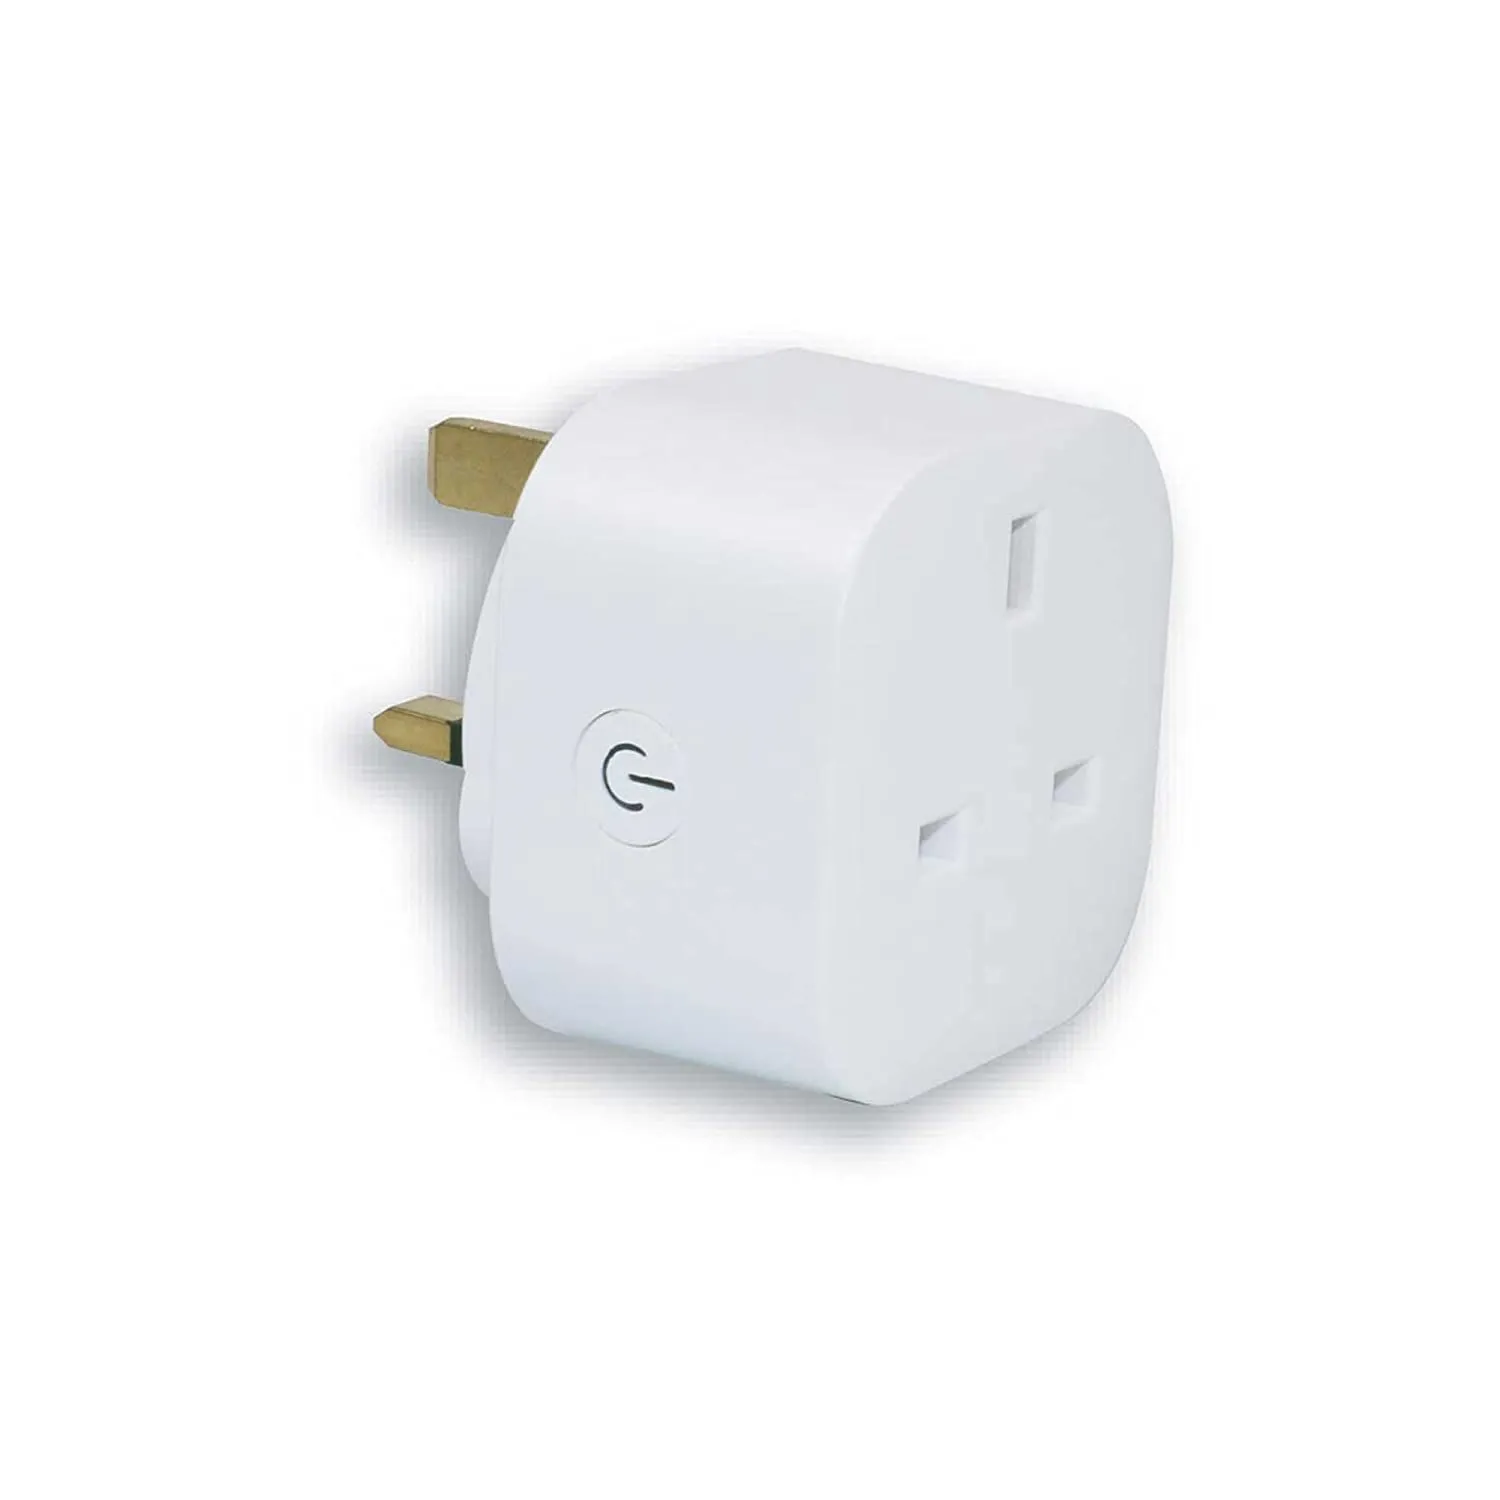 Zignito Smart Plug UK Adapter